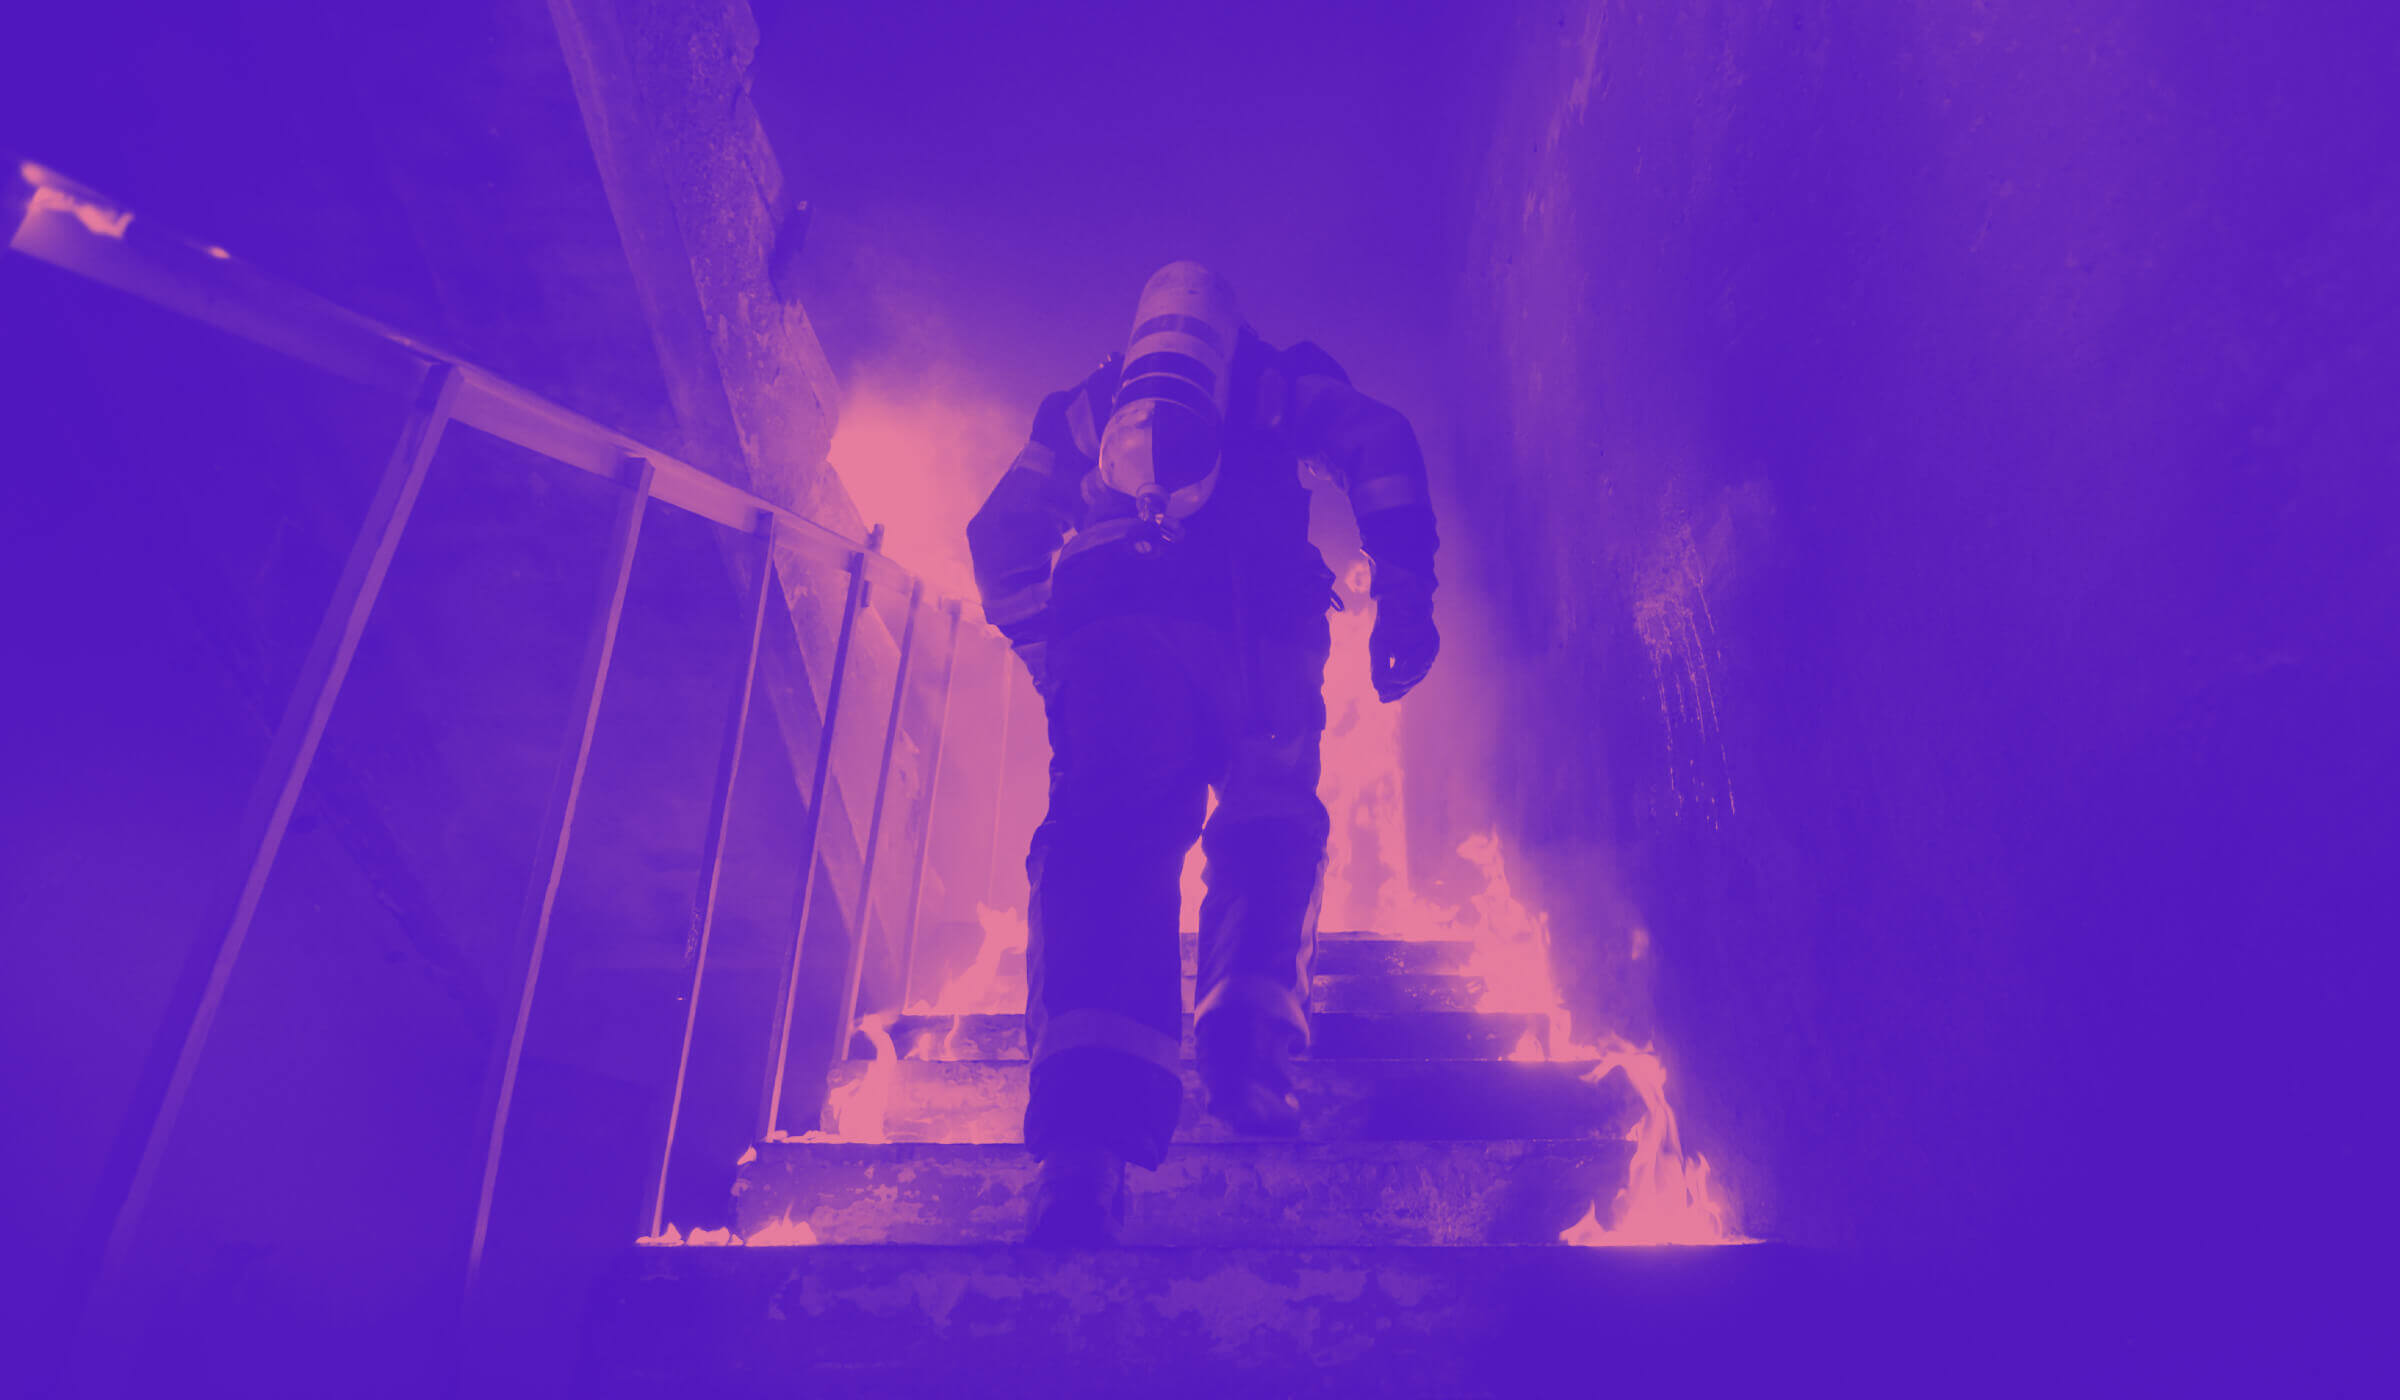 Fireman running up a flight of burning stairs